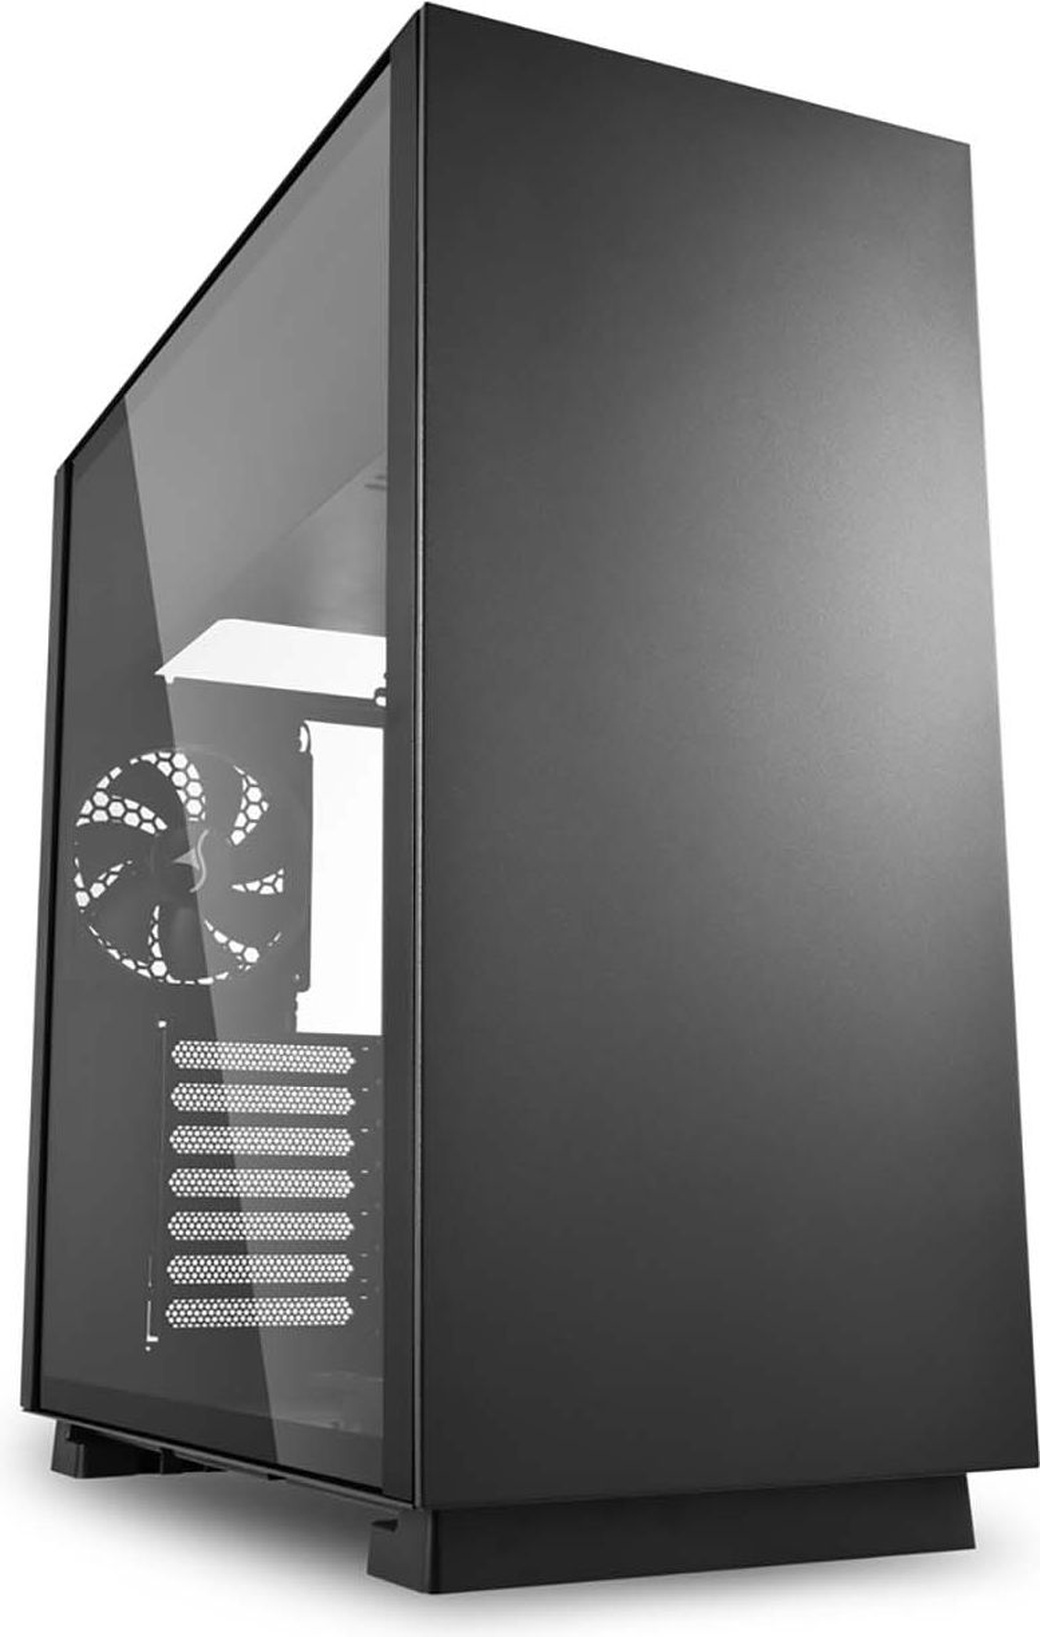 Компьютерный корпус Sharkoon Pure Steel, черный фото